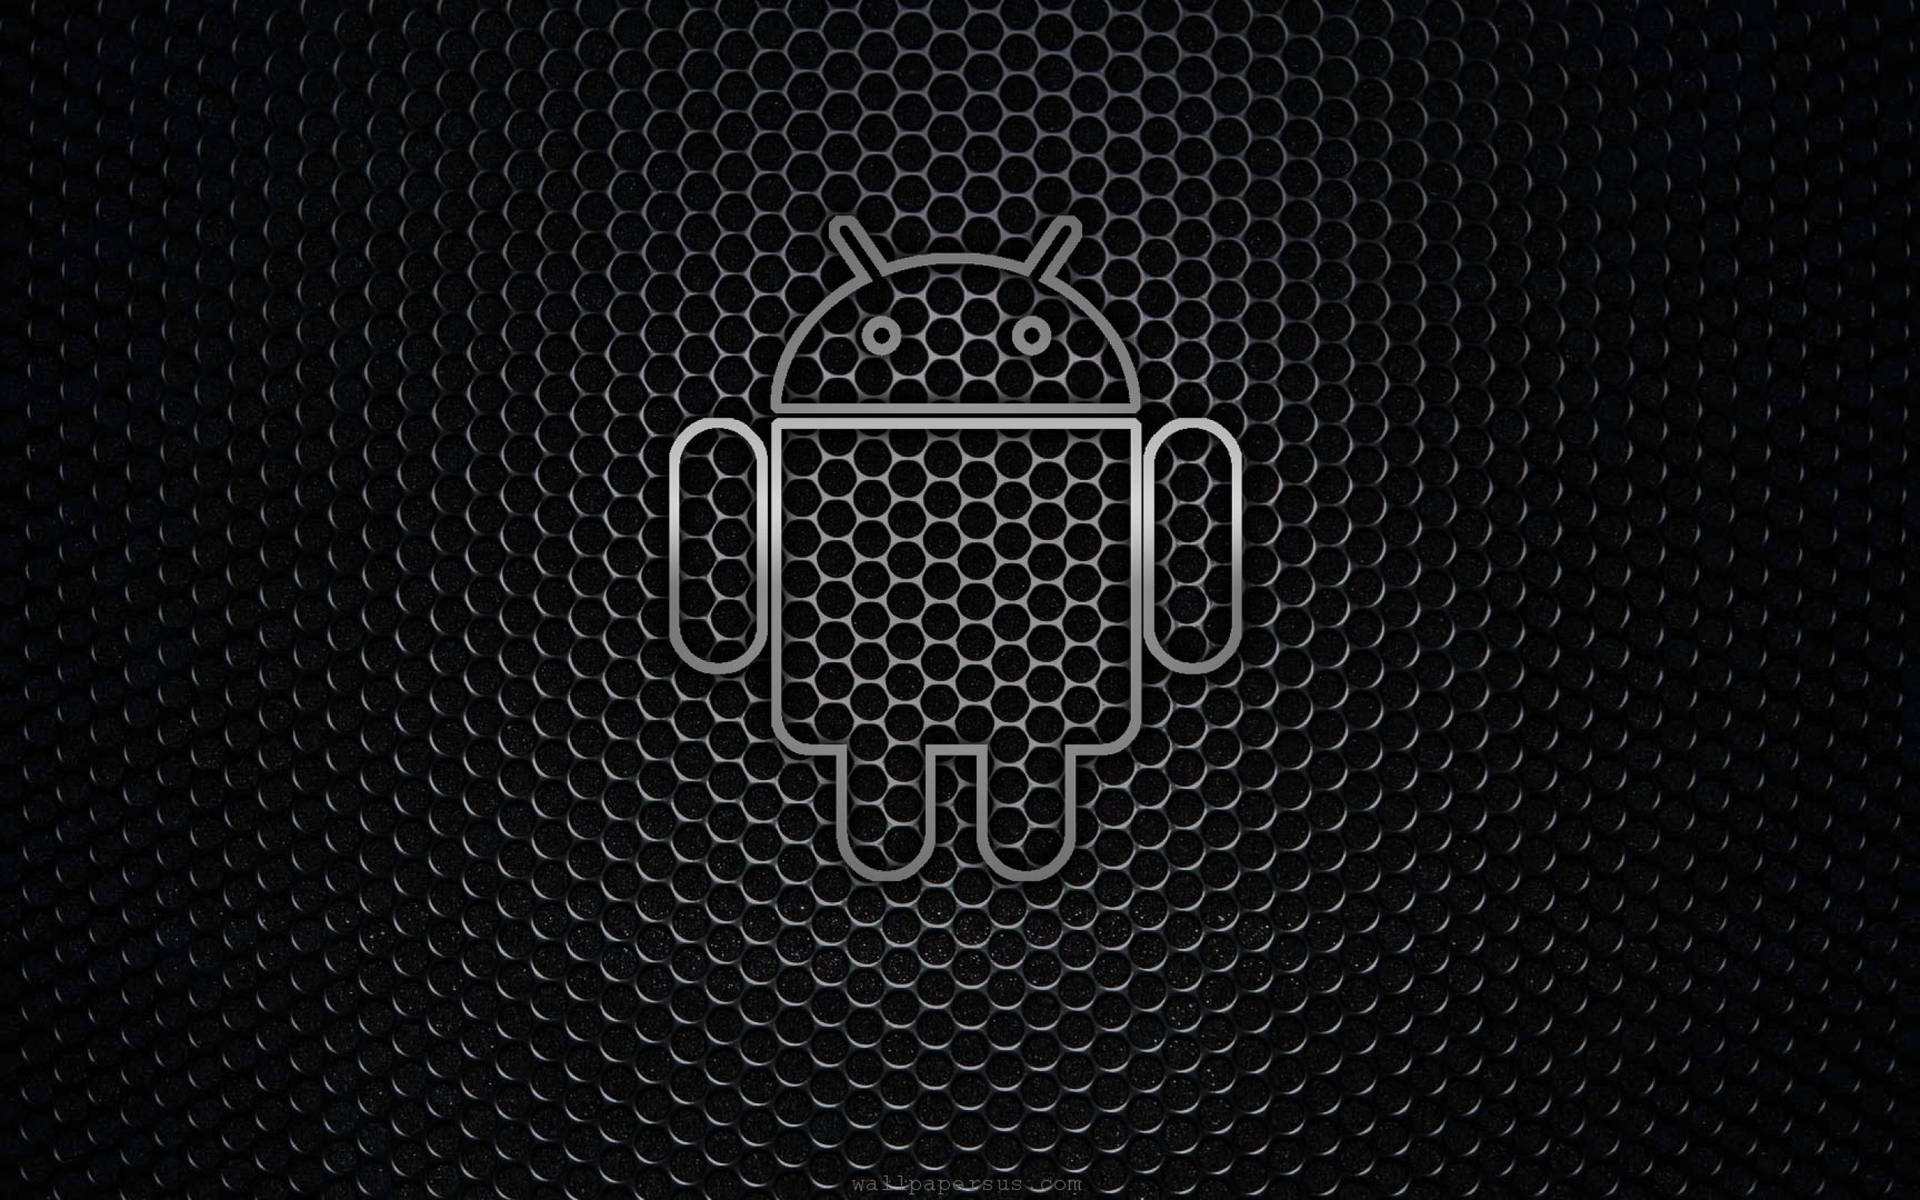 Hexagonal Mesh Android Robot Background